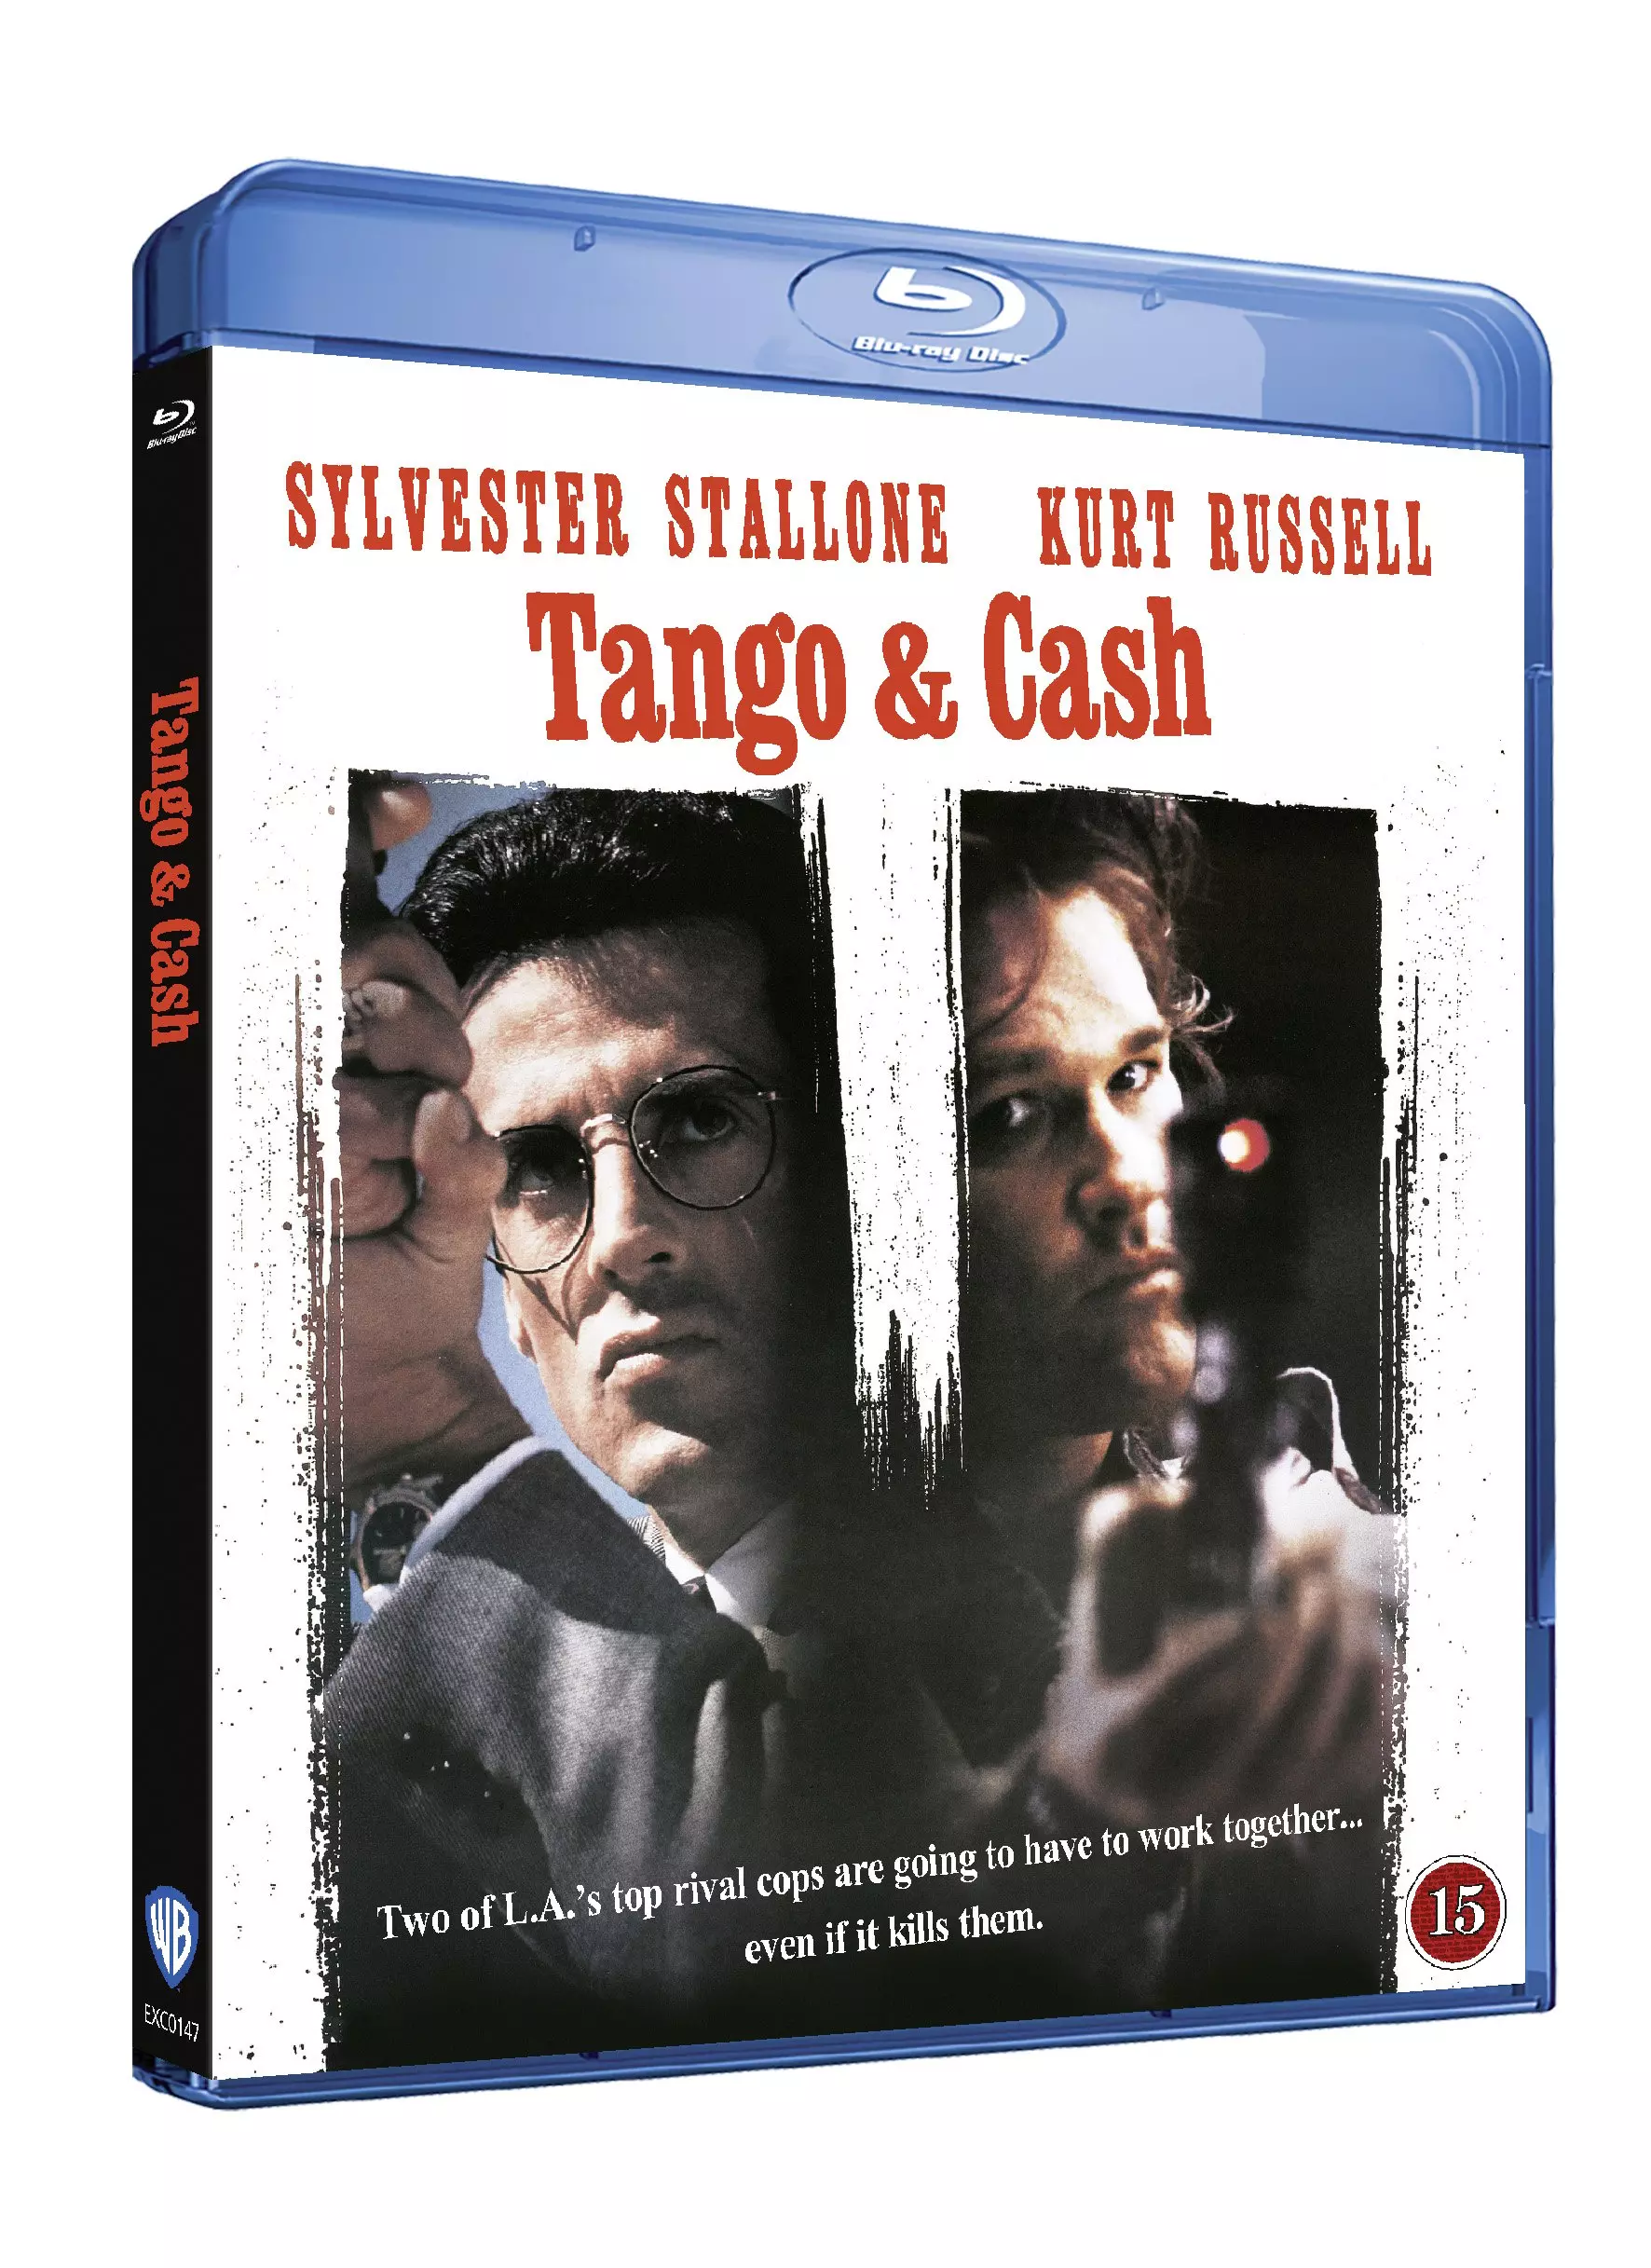 Tango And Cash 1989